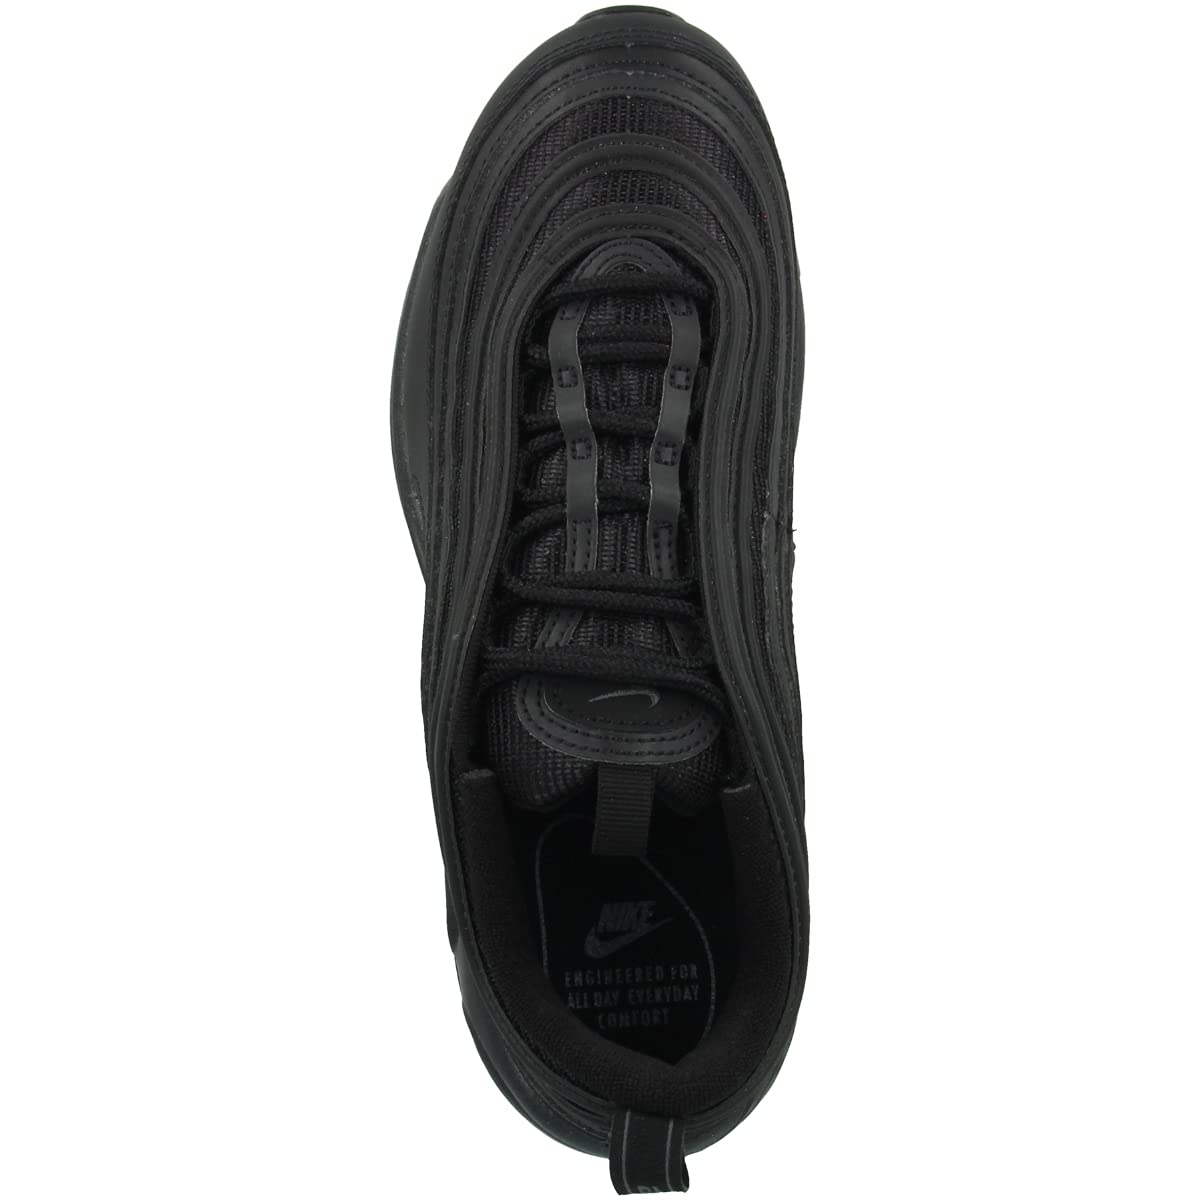 Nike Women's Track & Field Shoes, Black Black Black Dark Grey 001, 7 UK